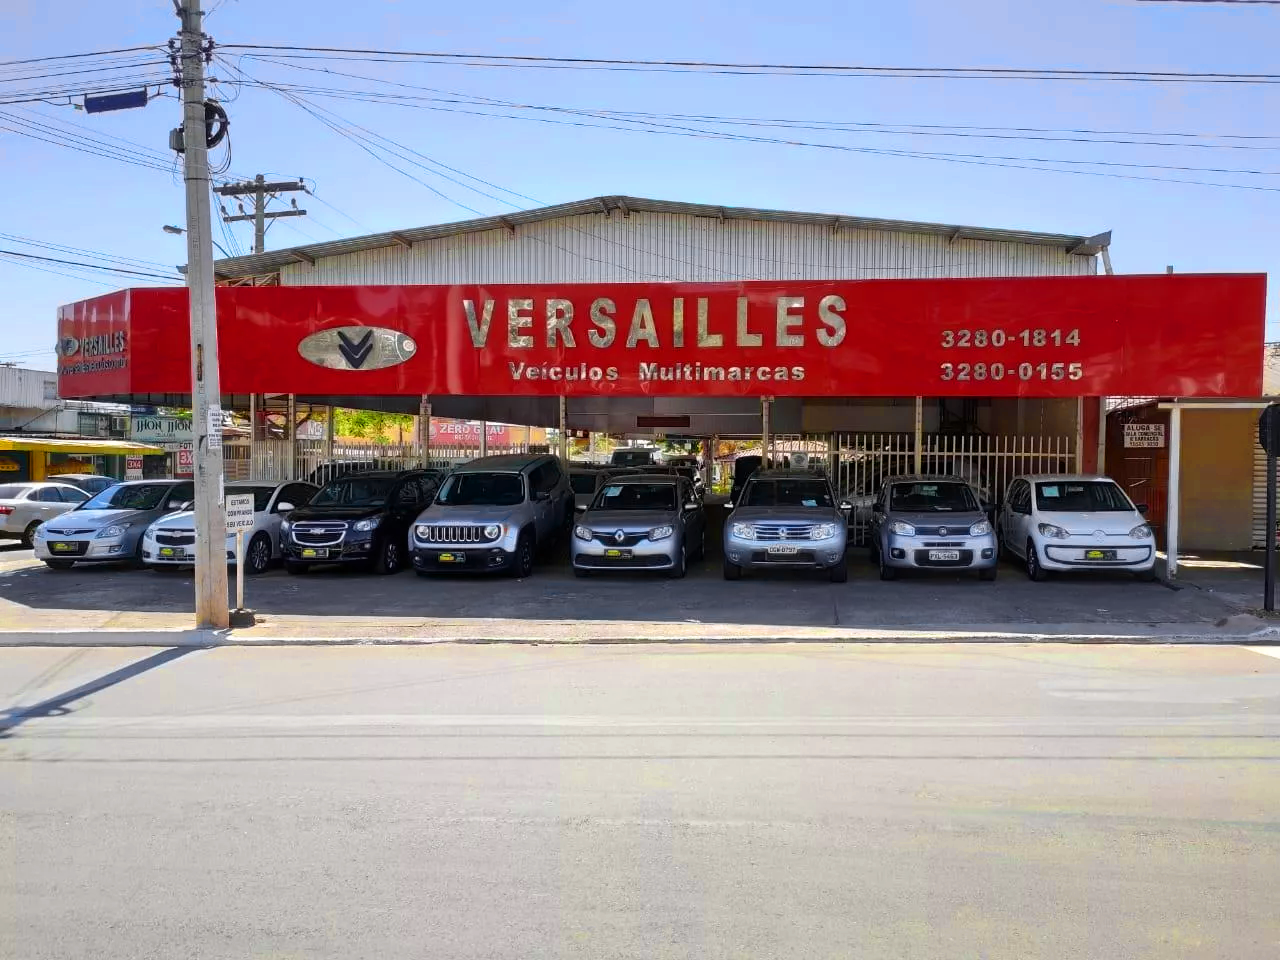 Fachada da loja Versailles Veículos Multimarcas  - Aparecida de Goiânia - GO